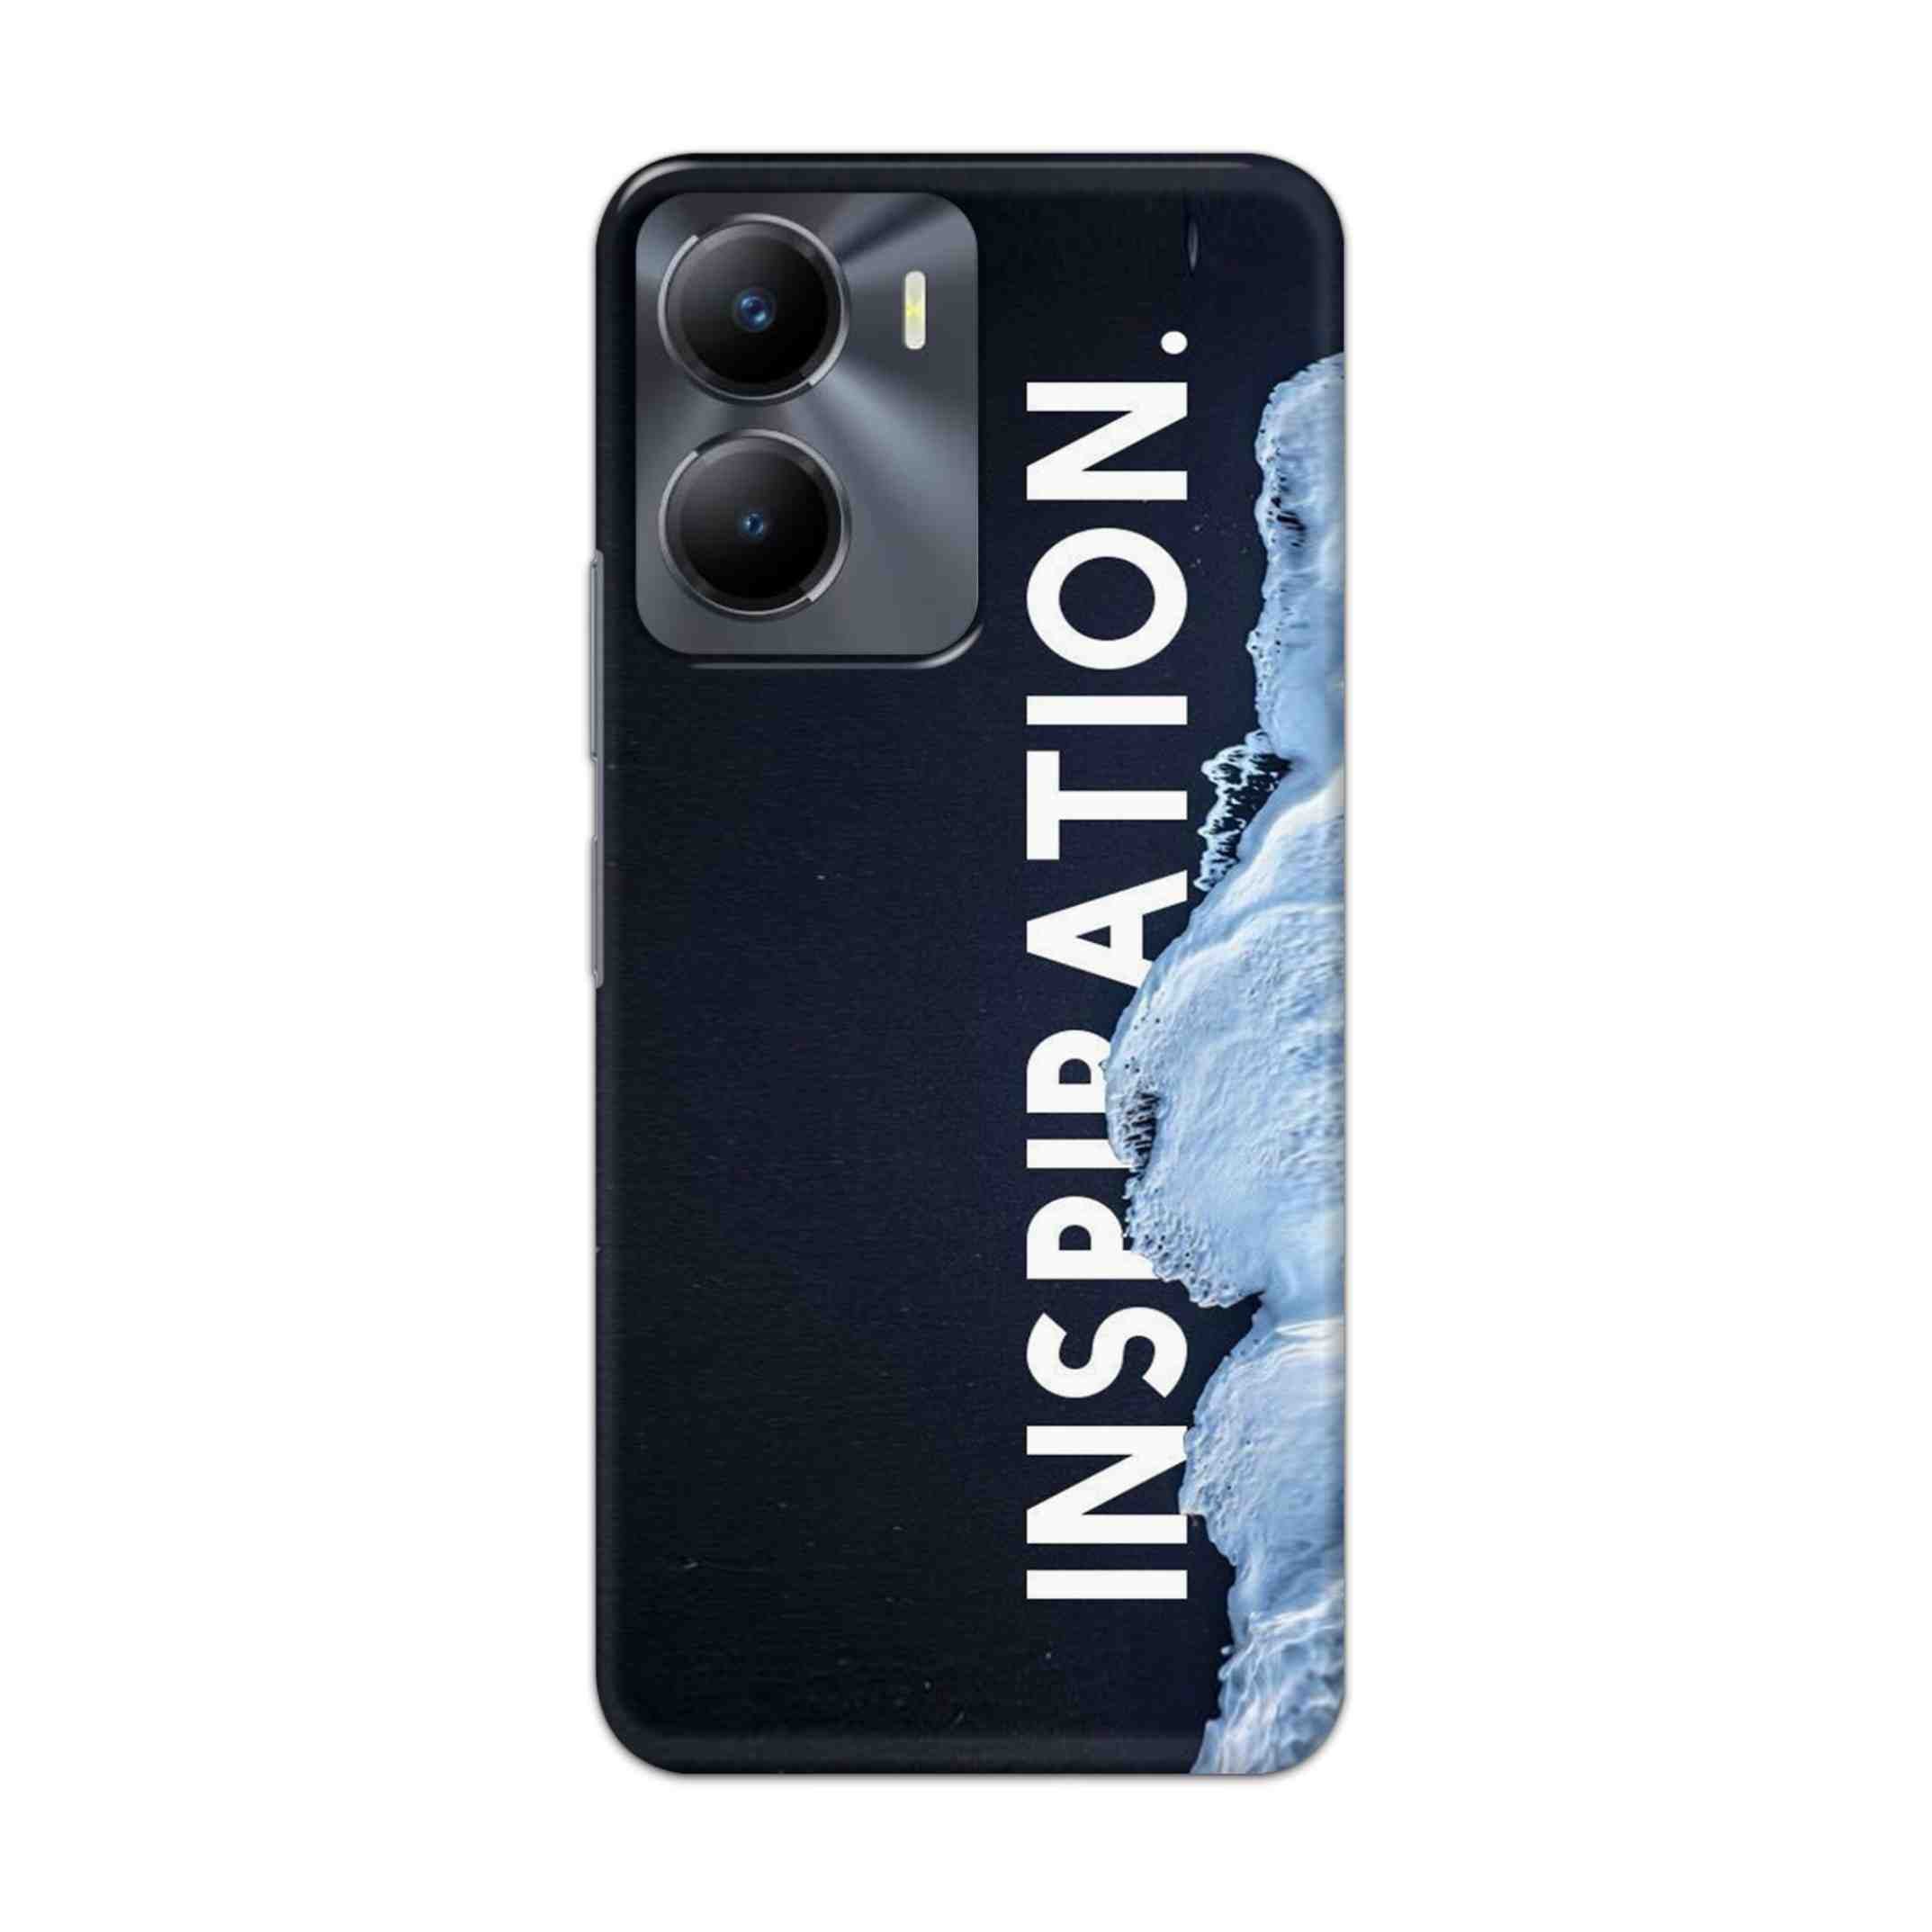 Buy Inspiration Hard Back Mobile Phone Case Cover For Vivo Y56 Online